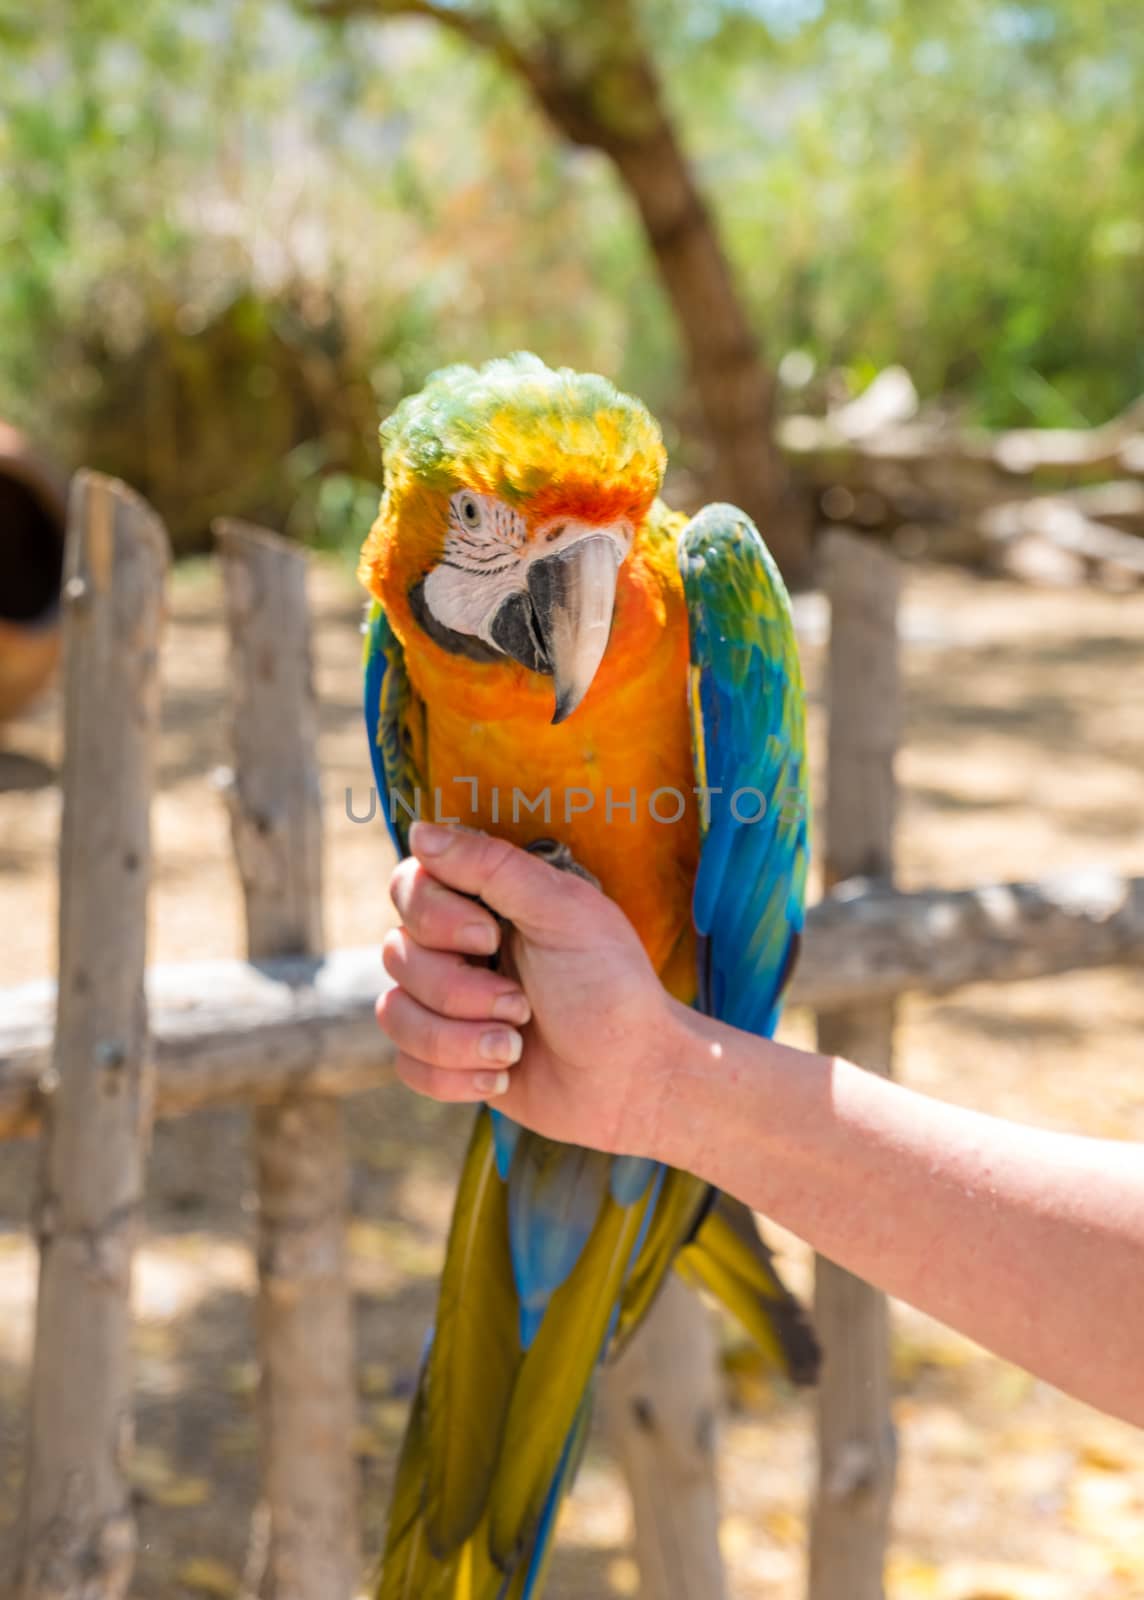 Young Blue-and-yellow Macaw - Ara ararauna by jcdiazhidalgo